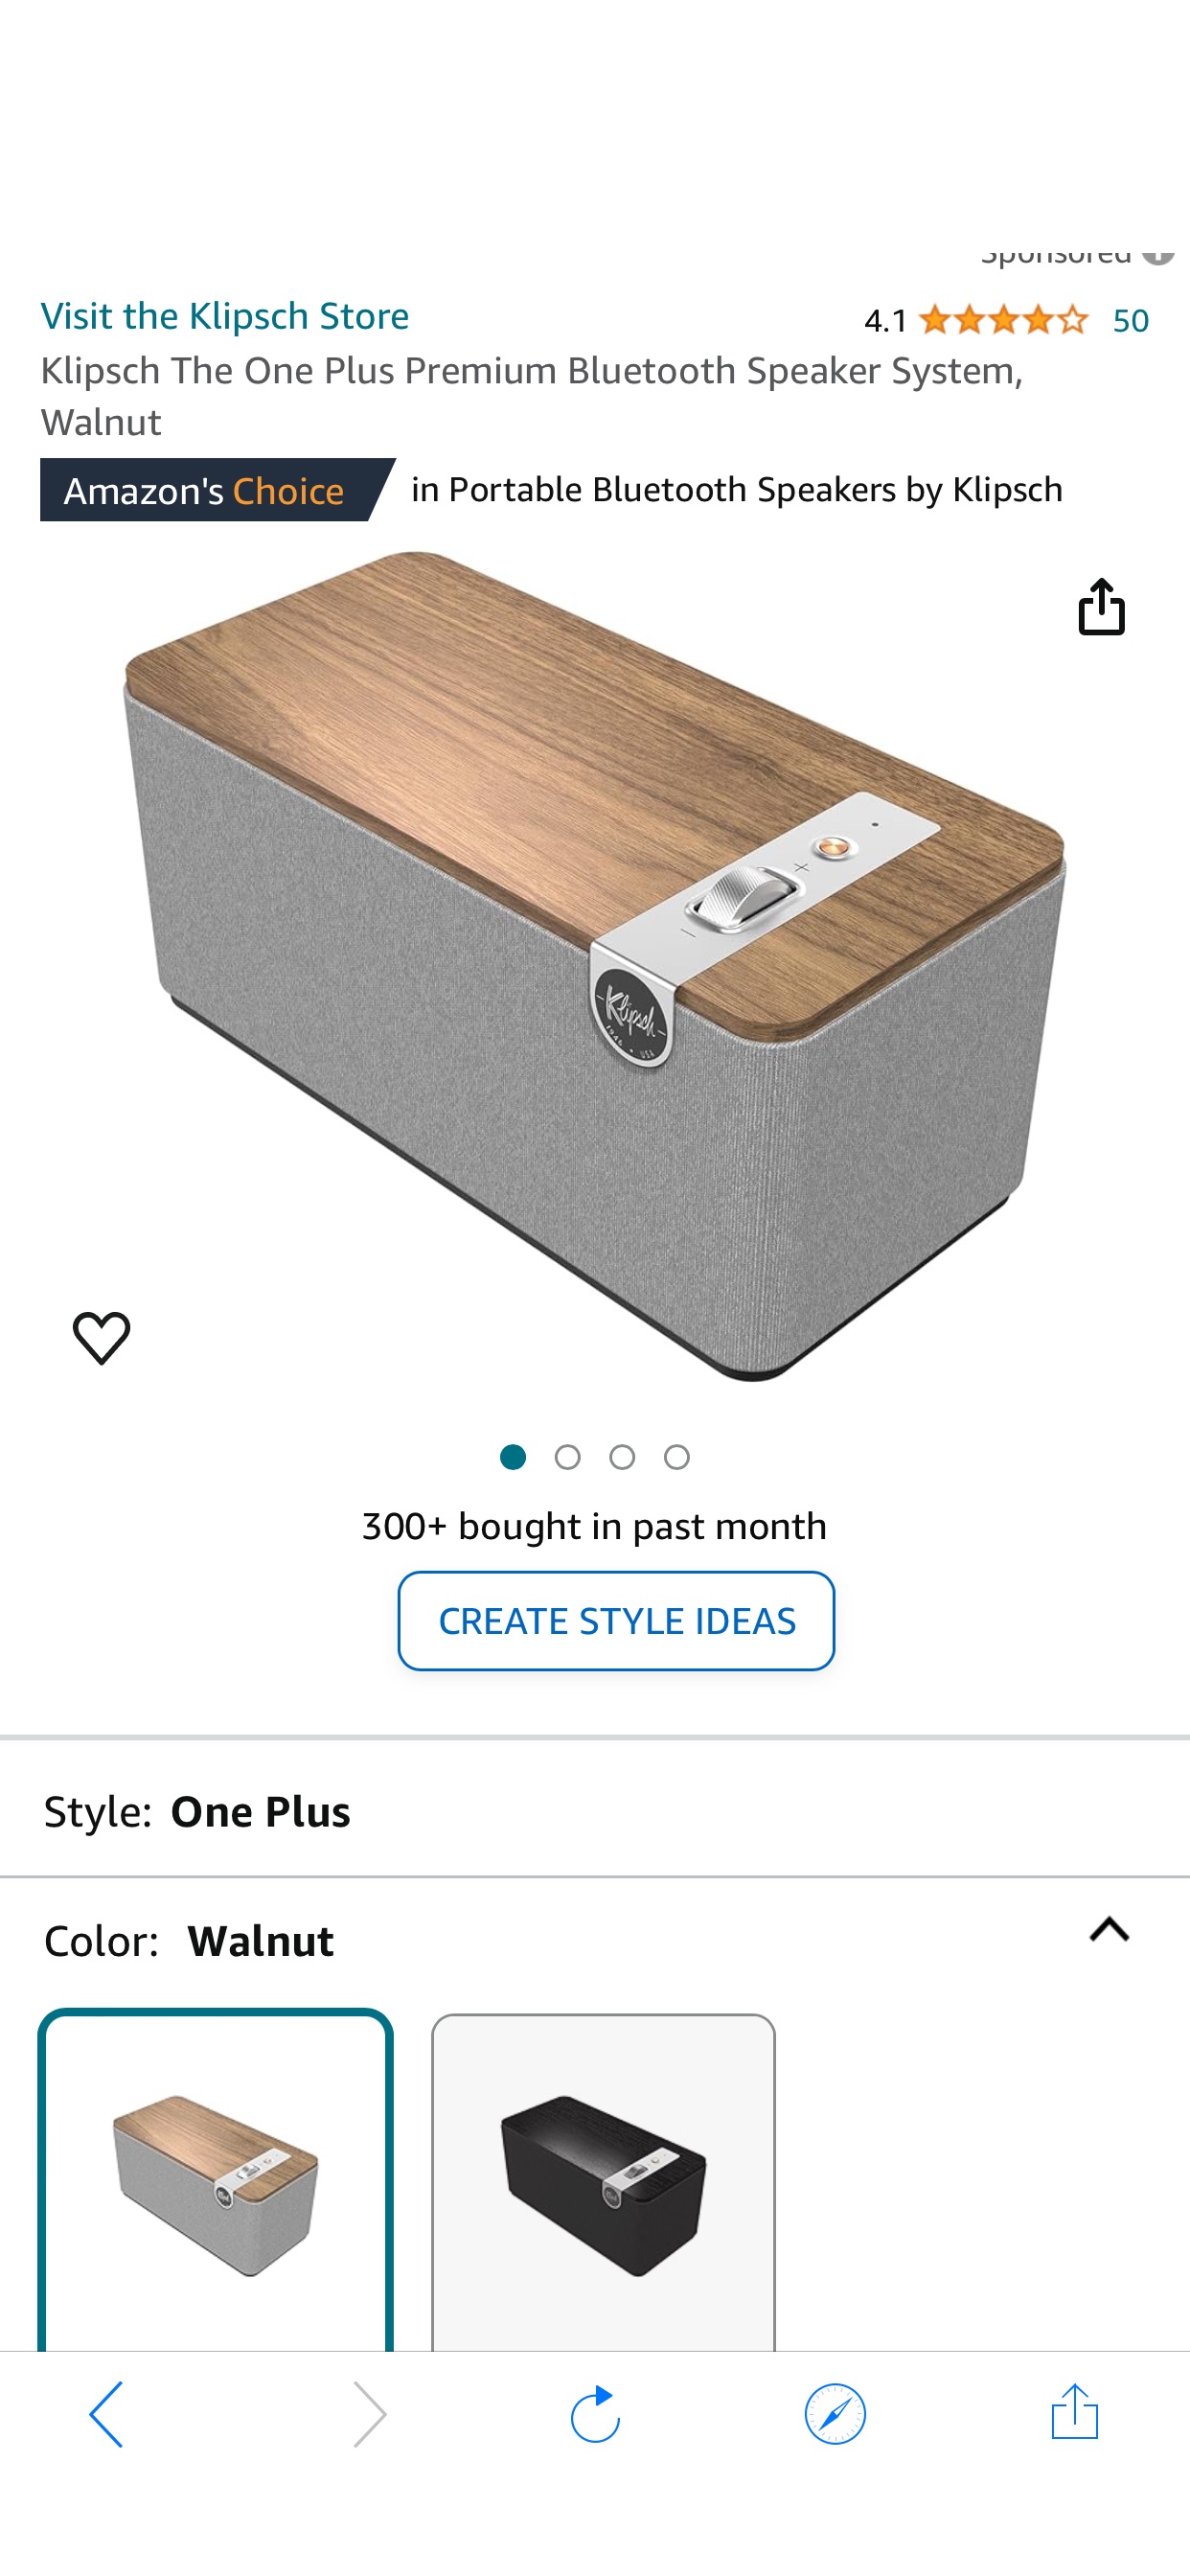 Amazon.com: Klipsch The One Plus Premium Bluetooth Speaker System, Walnut : Electronics 蓝牙音箱